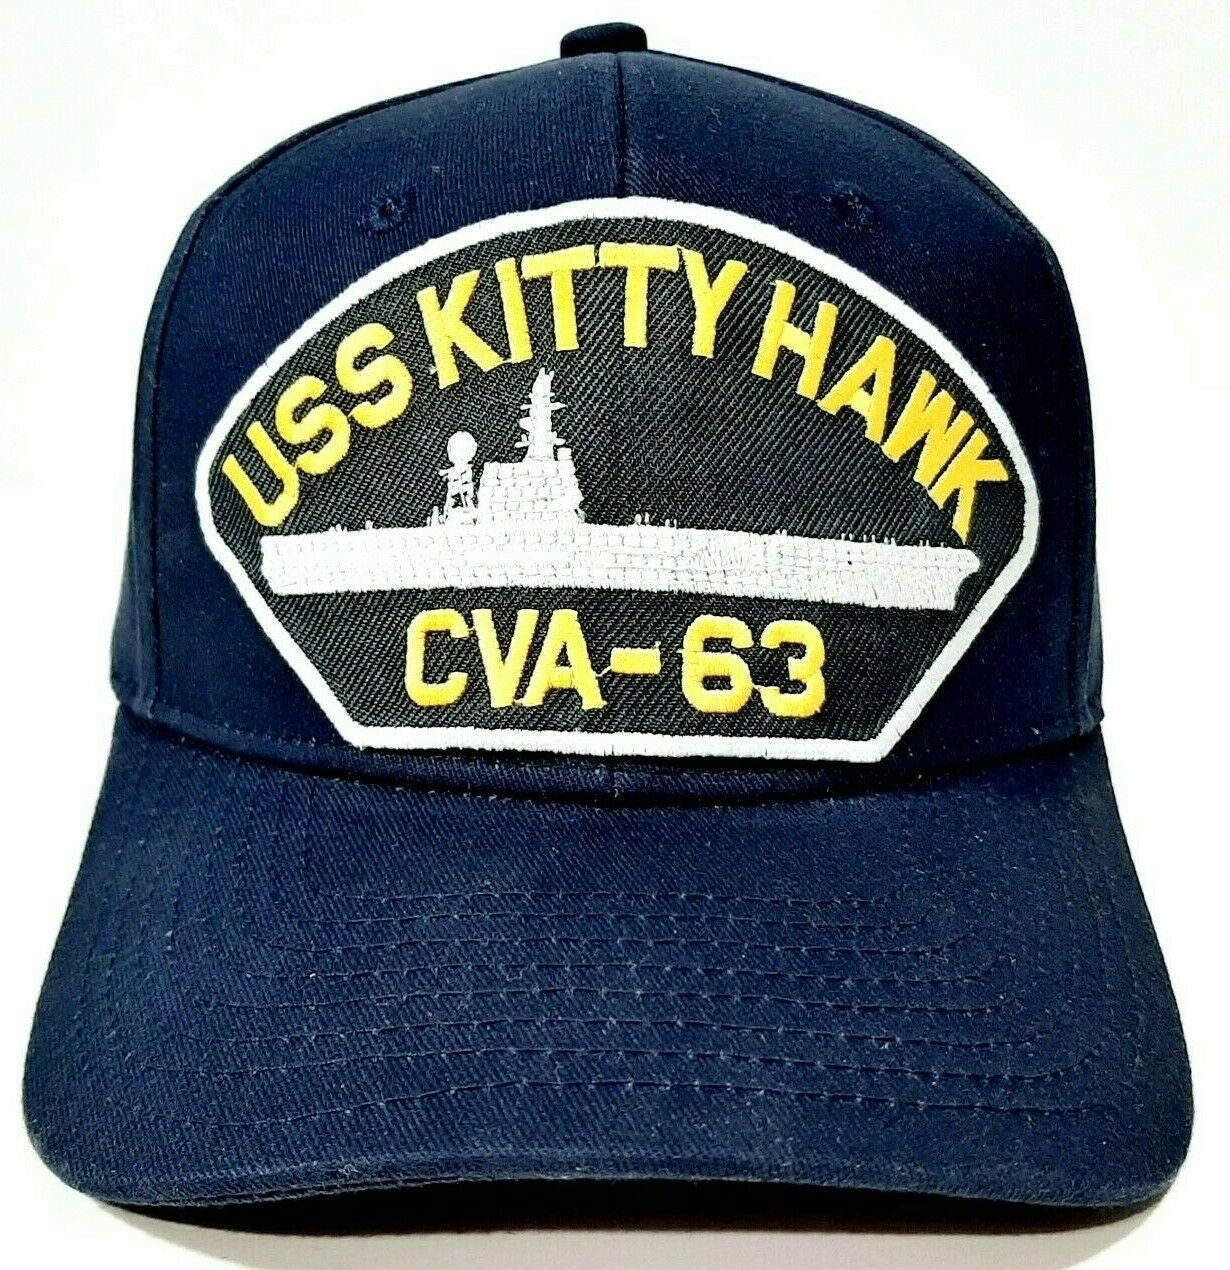 US Navy USS Kitty Hawk CVA-63 Men's Patch Cap Hat Navy Blue Strapback 100% Acrylic